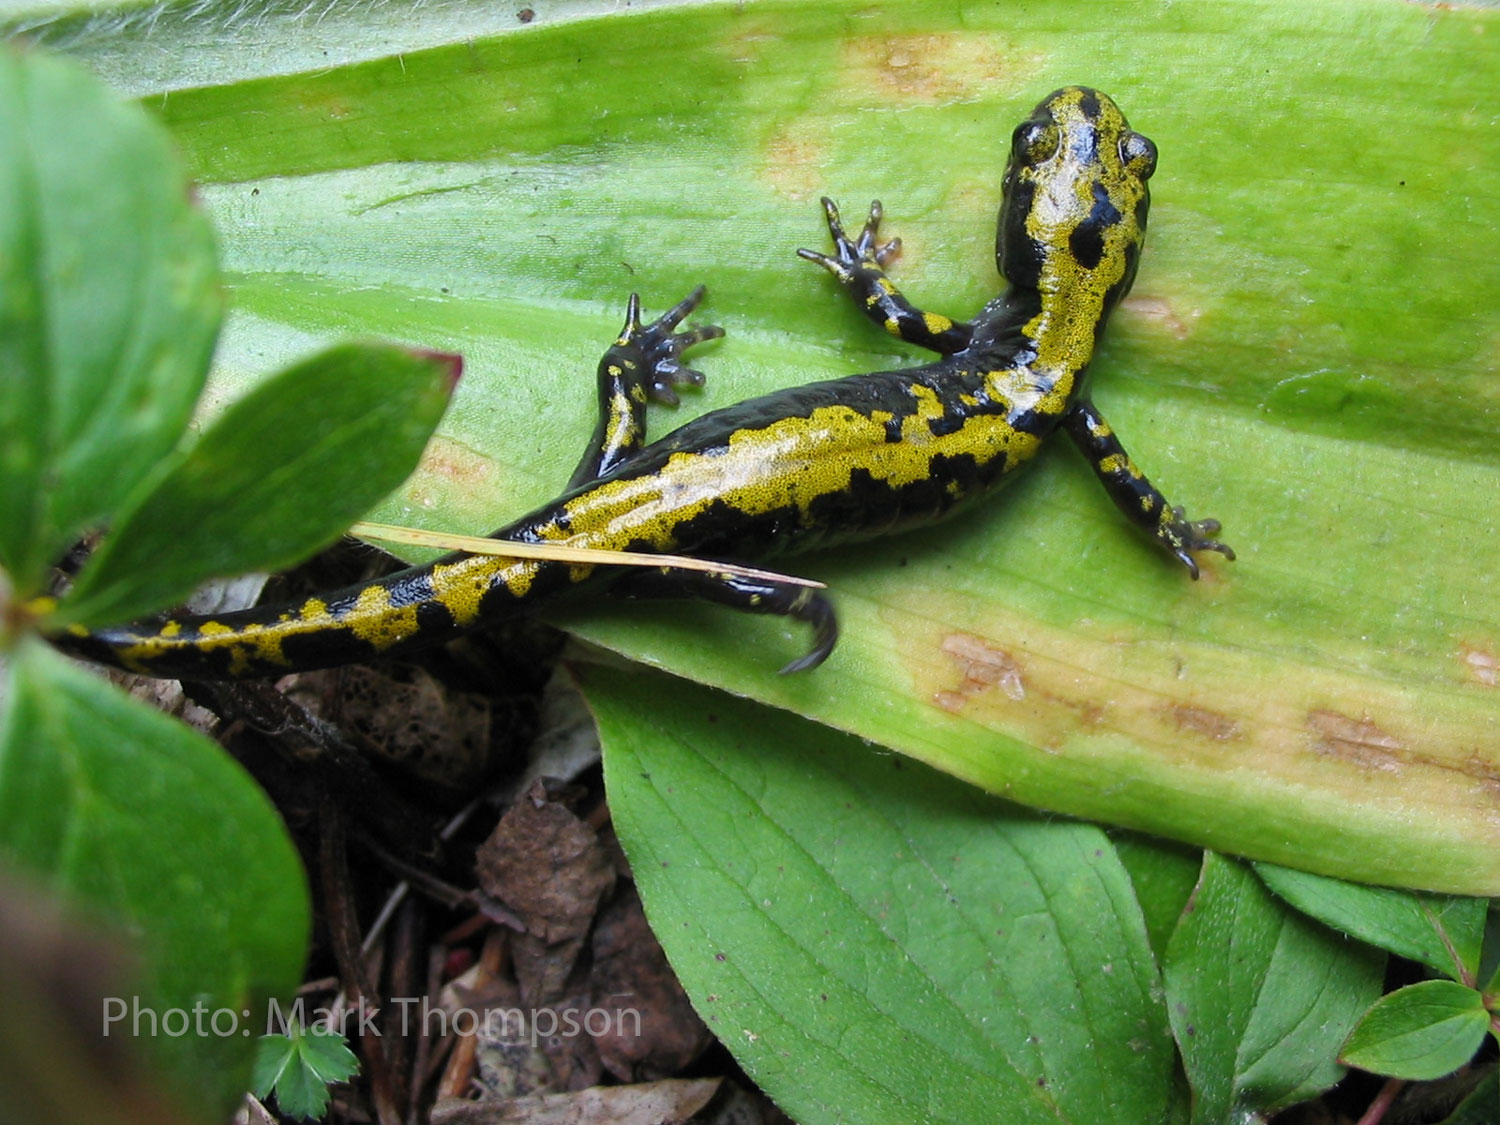 long toed salamander on a leaf photo by Mark Thompson